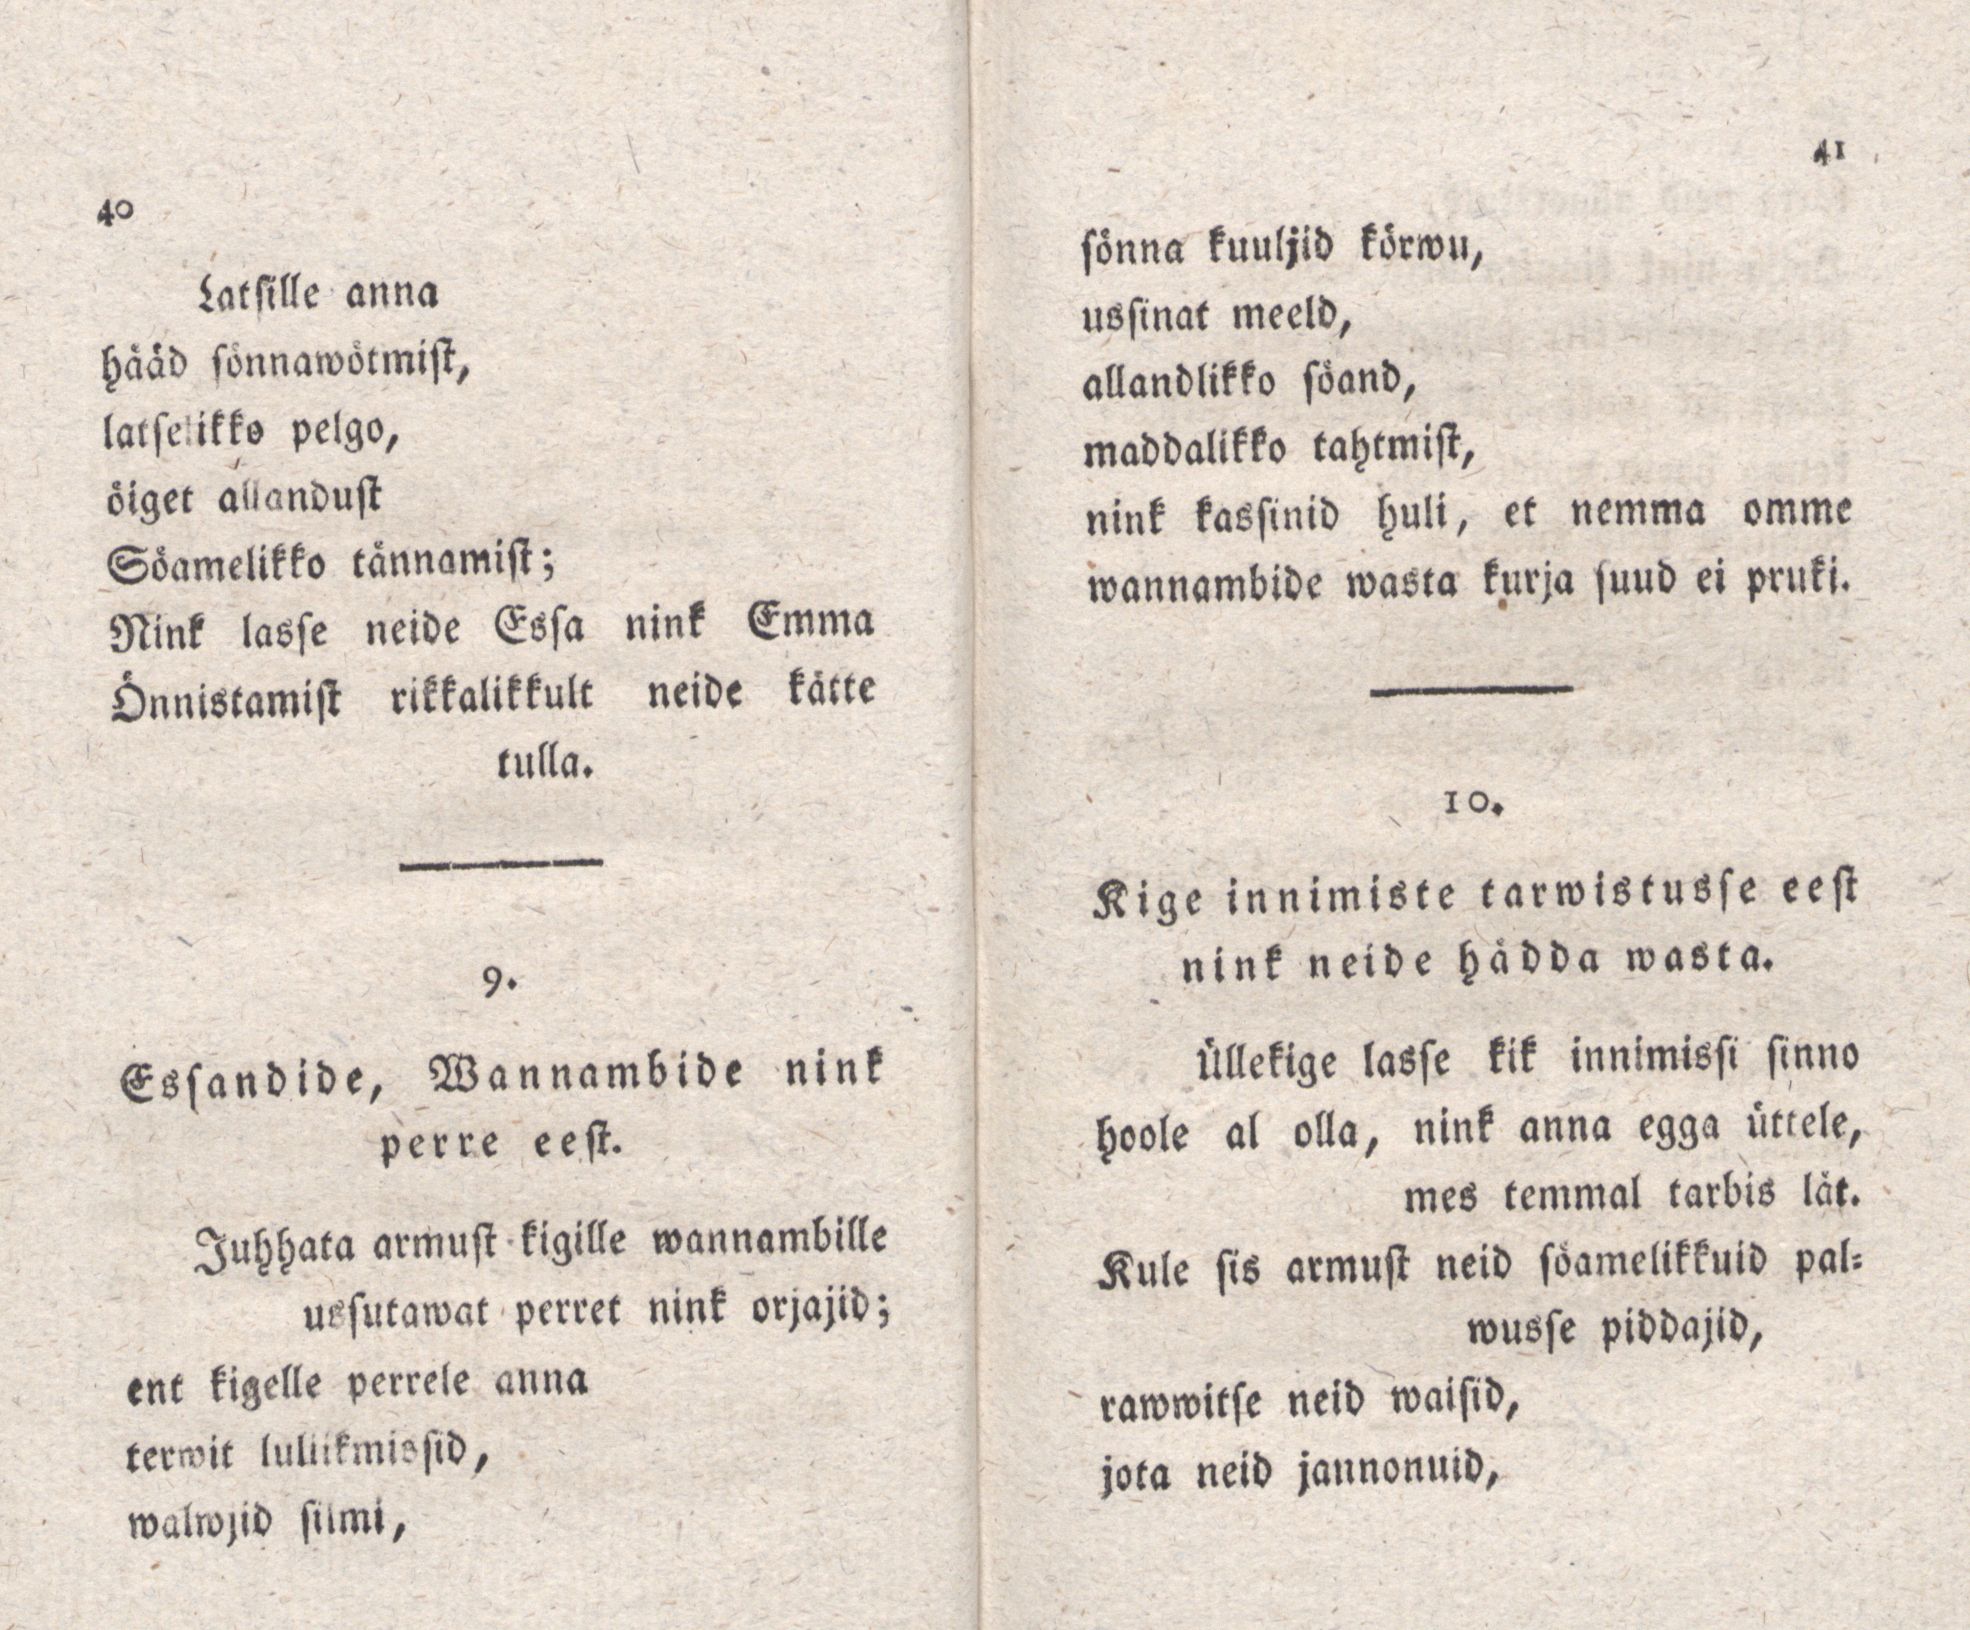 Kristlik nink söamelik Palwusse-Ramat Ma-Ristiinnimissille tarbis (1820) | 21. (40-41) Main body of text